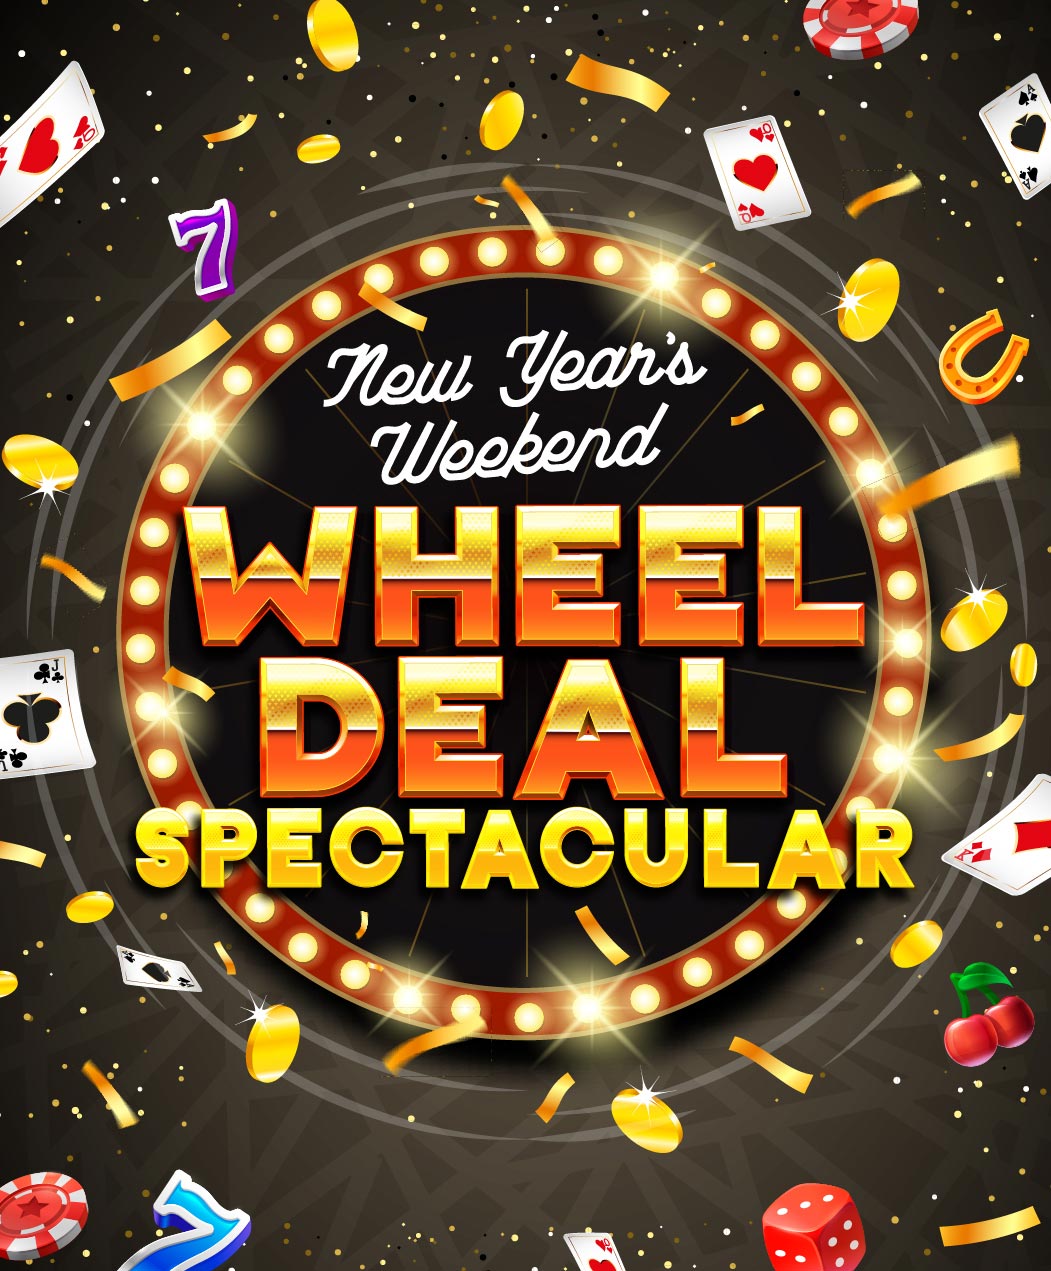 Wheel Deal Spectacular